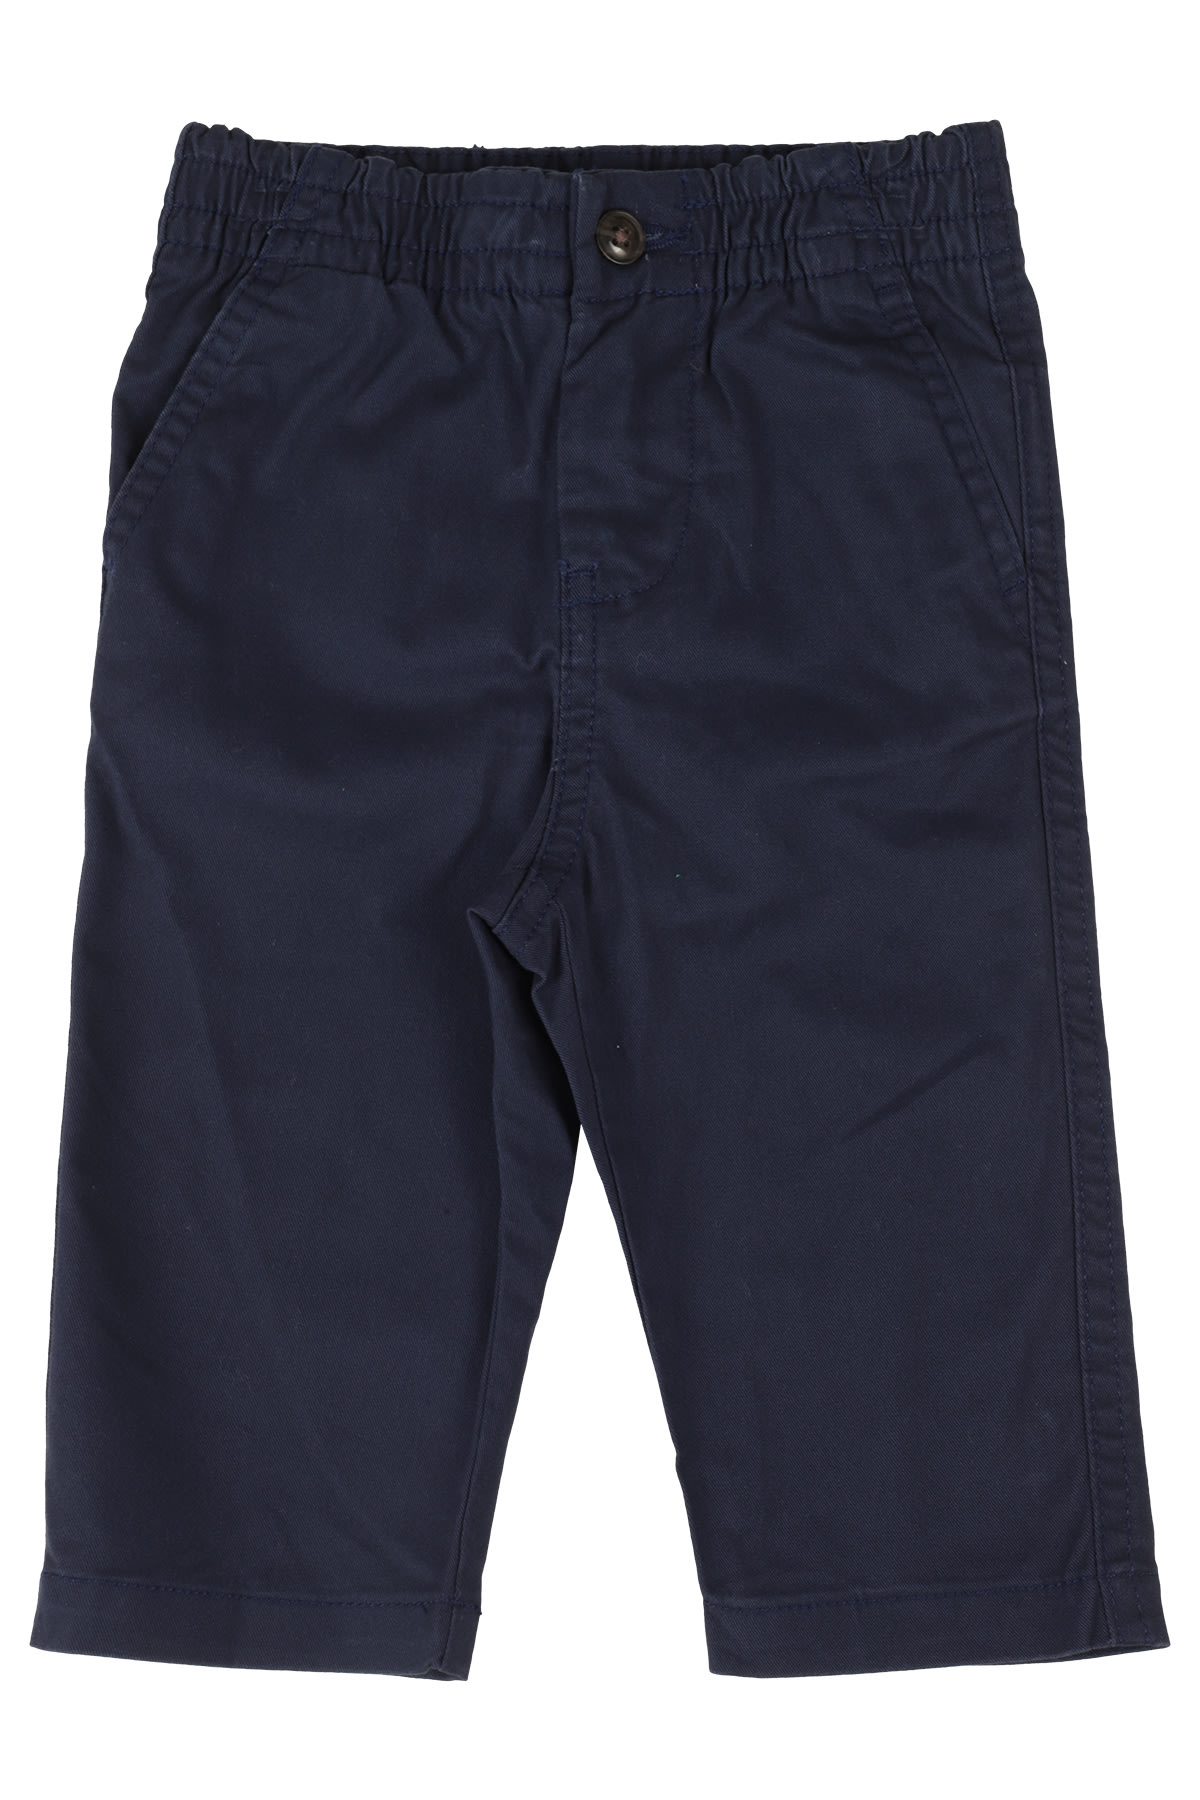 Polo Ralph Lauren Babies' Pantaloni In Navy